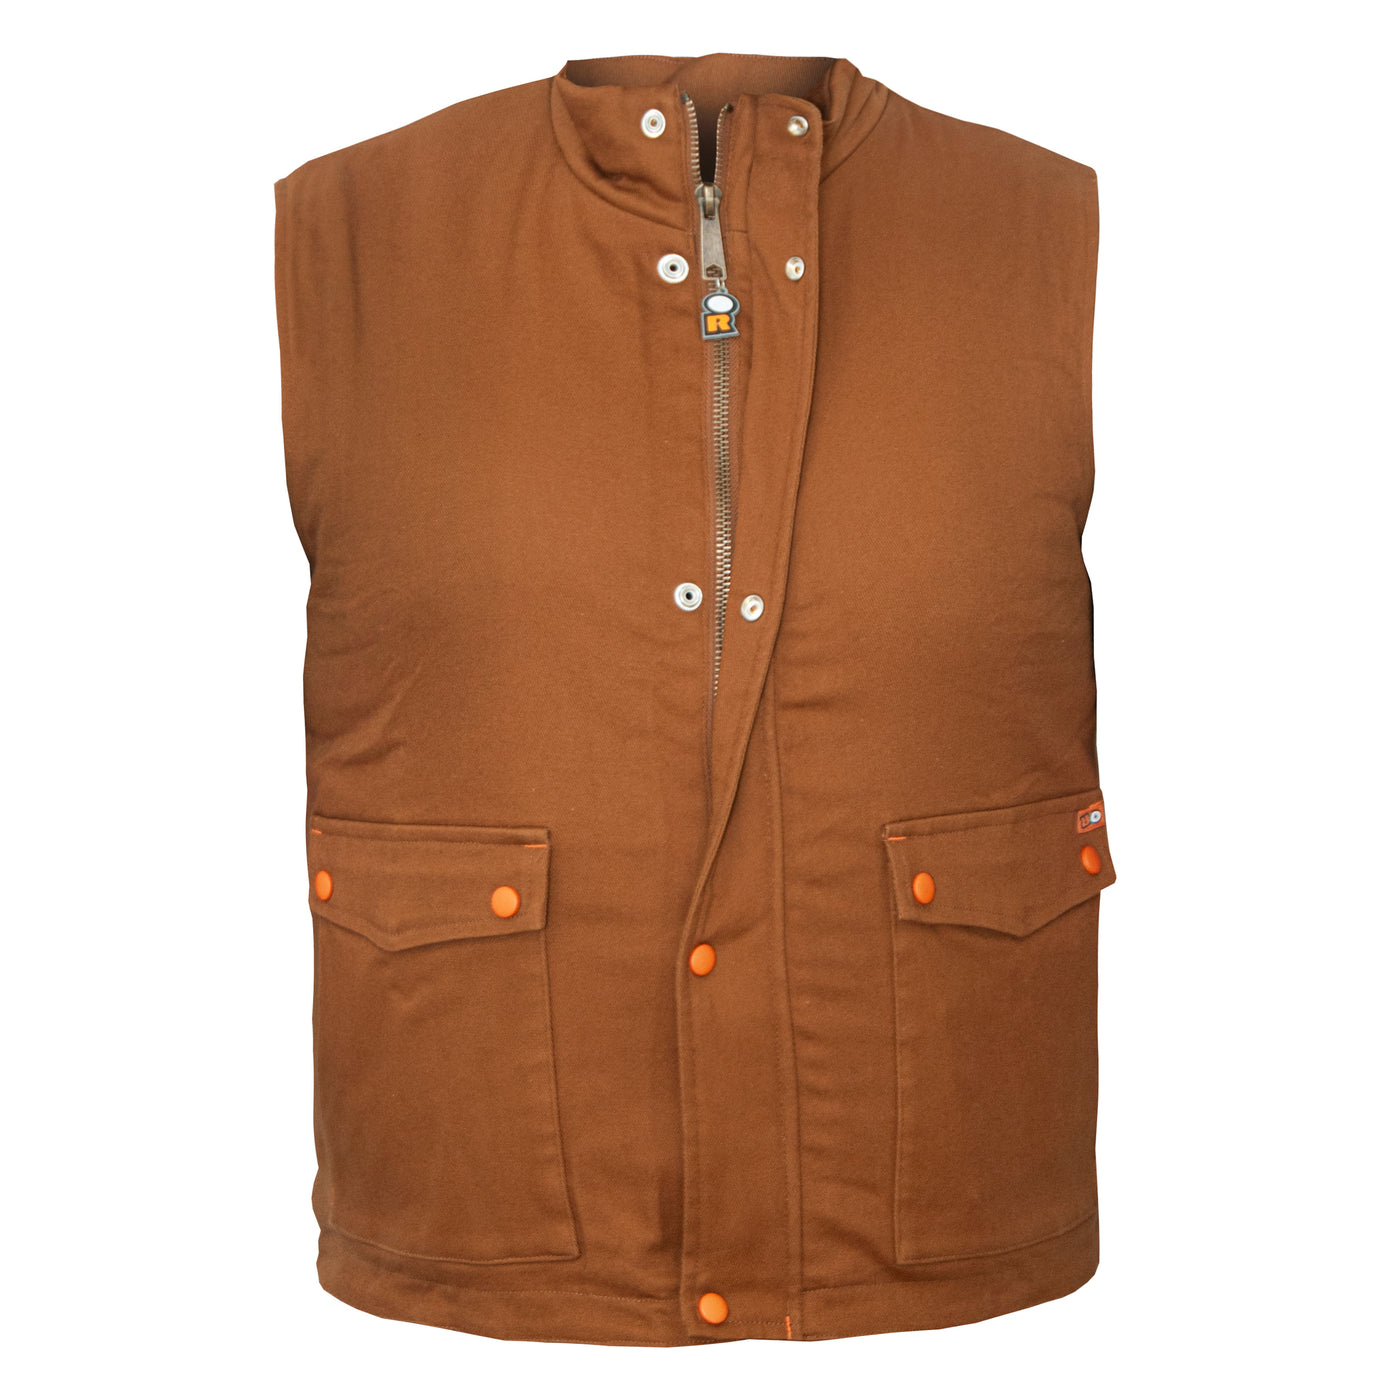 Orange River "Husky" men's work jacket